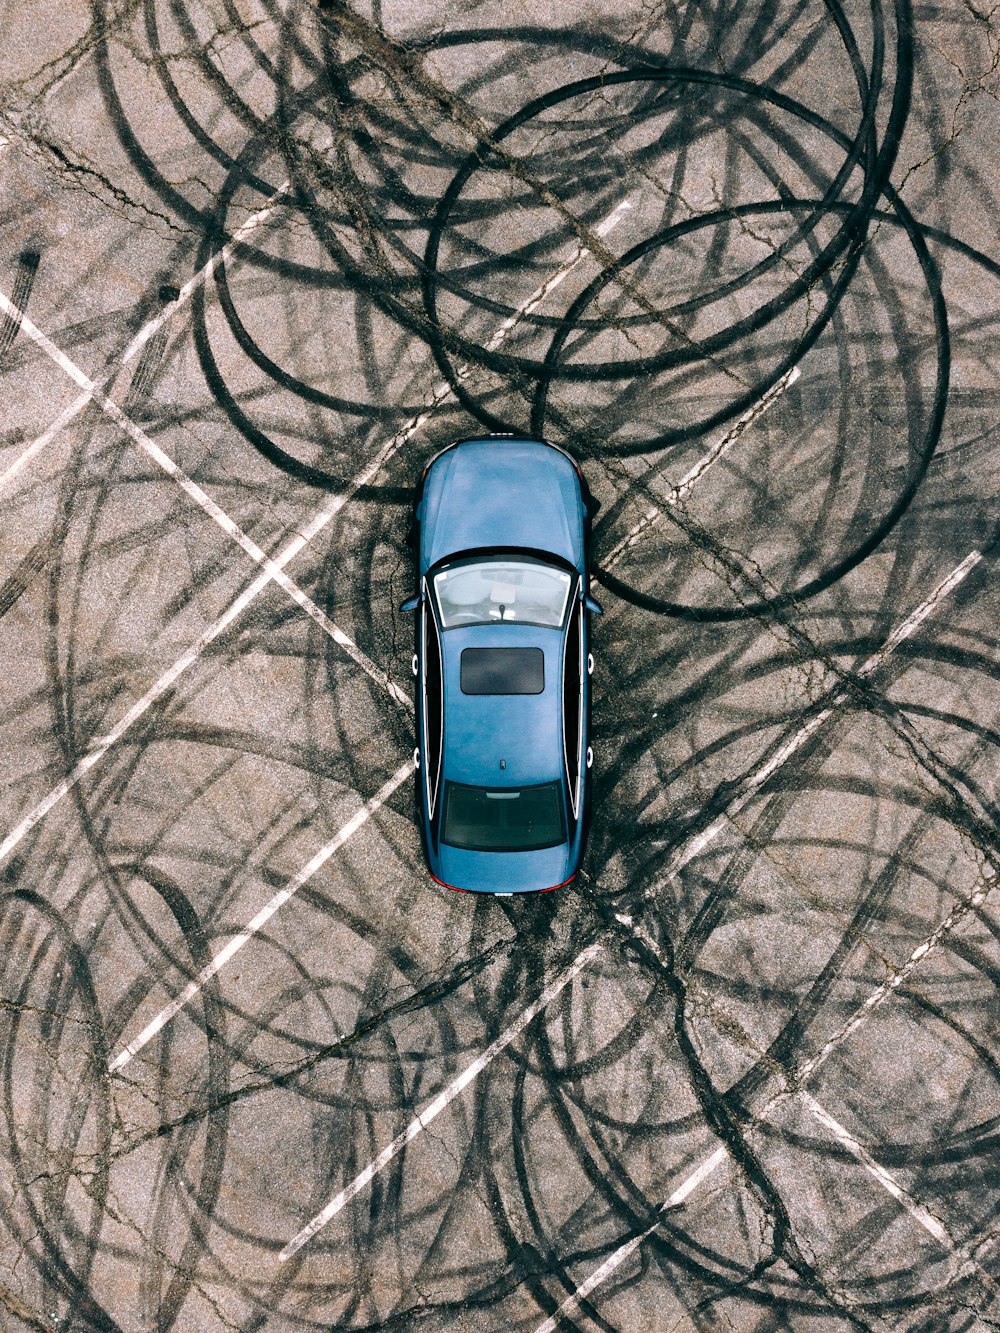 blue and black flip phone